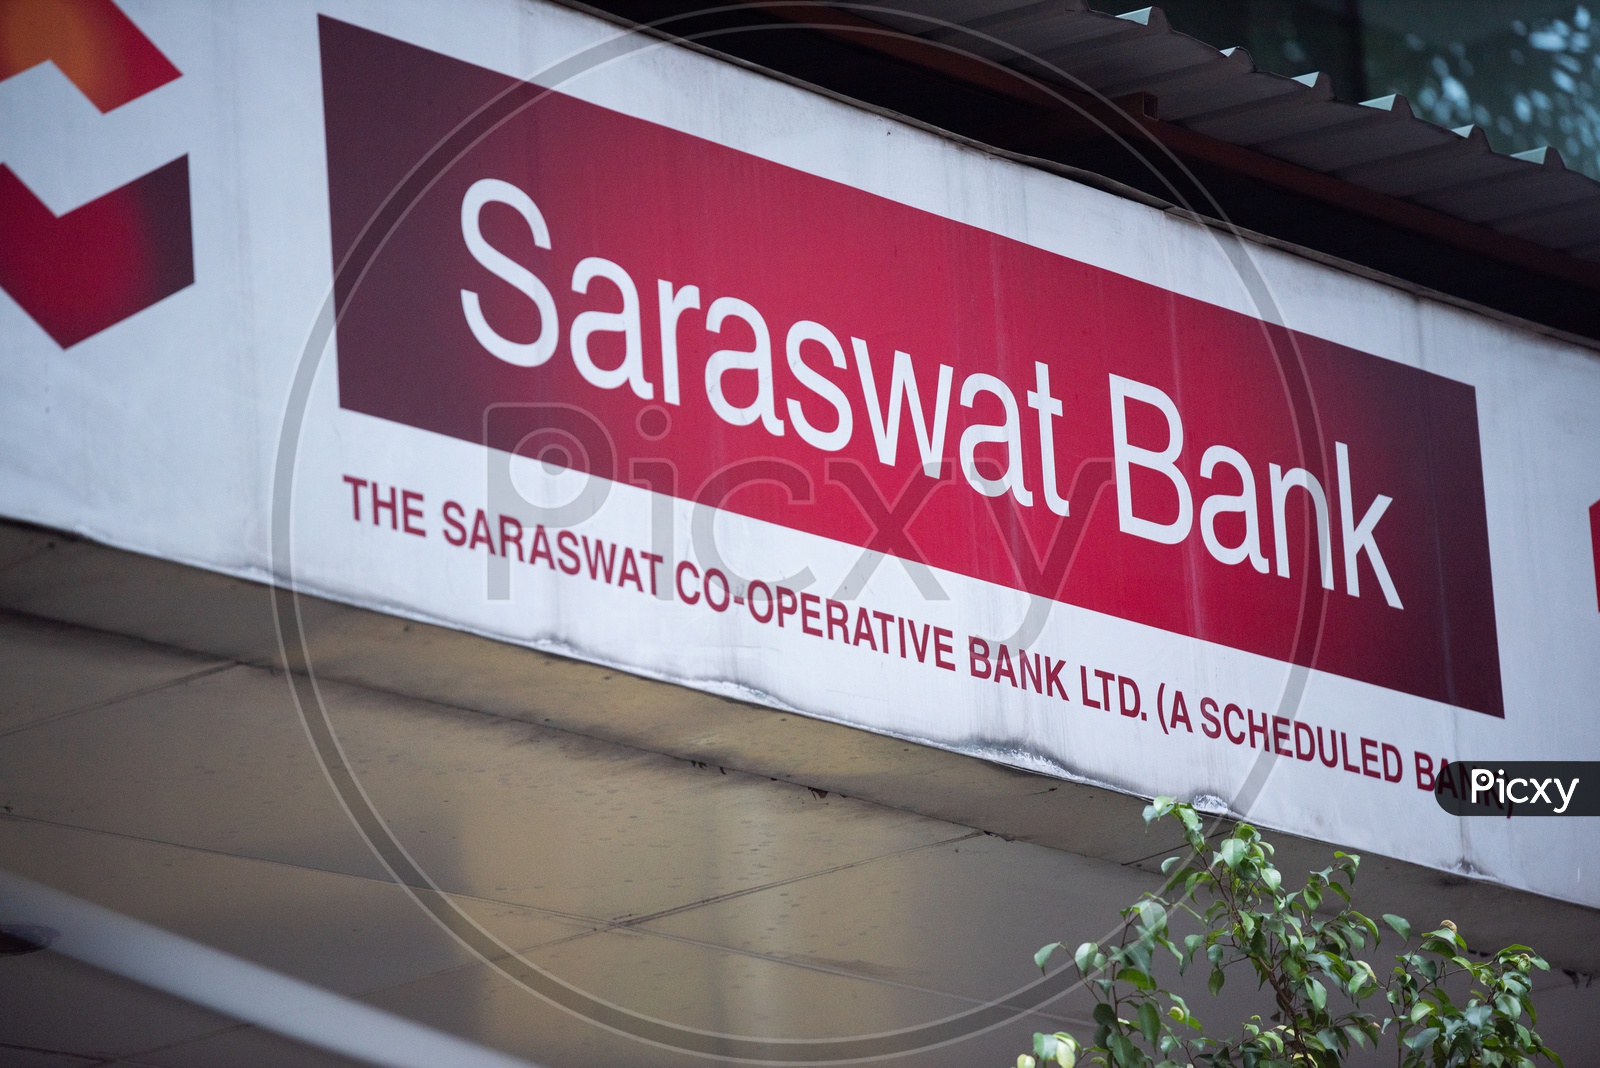 Saraswat Bank Society Connekt by The Saraswat Co-operative Bank Ltd.